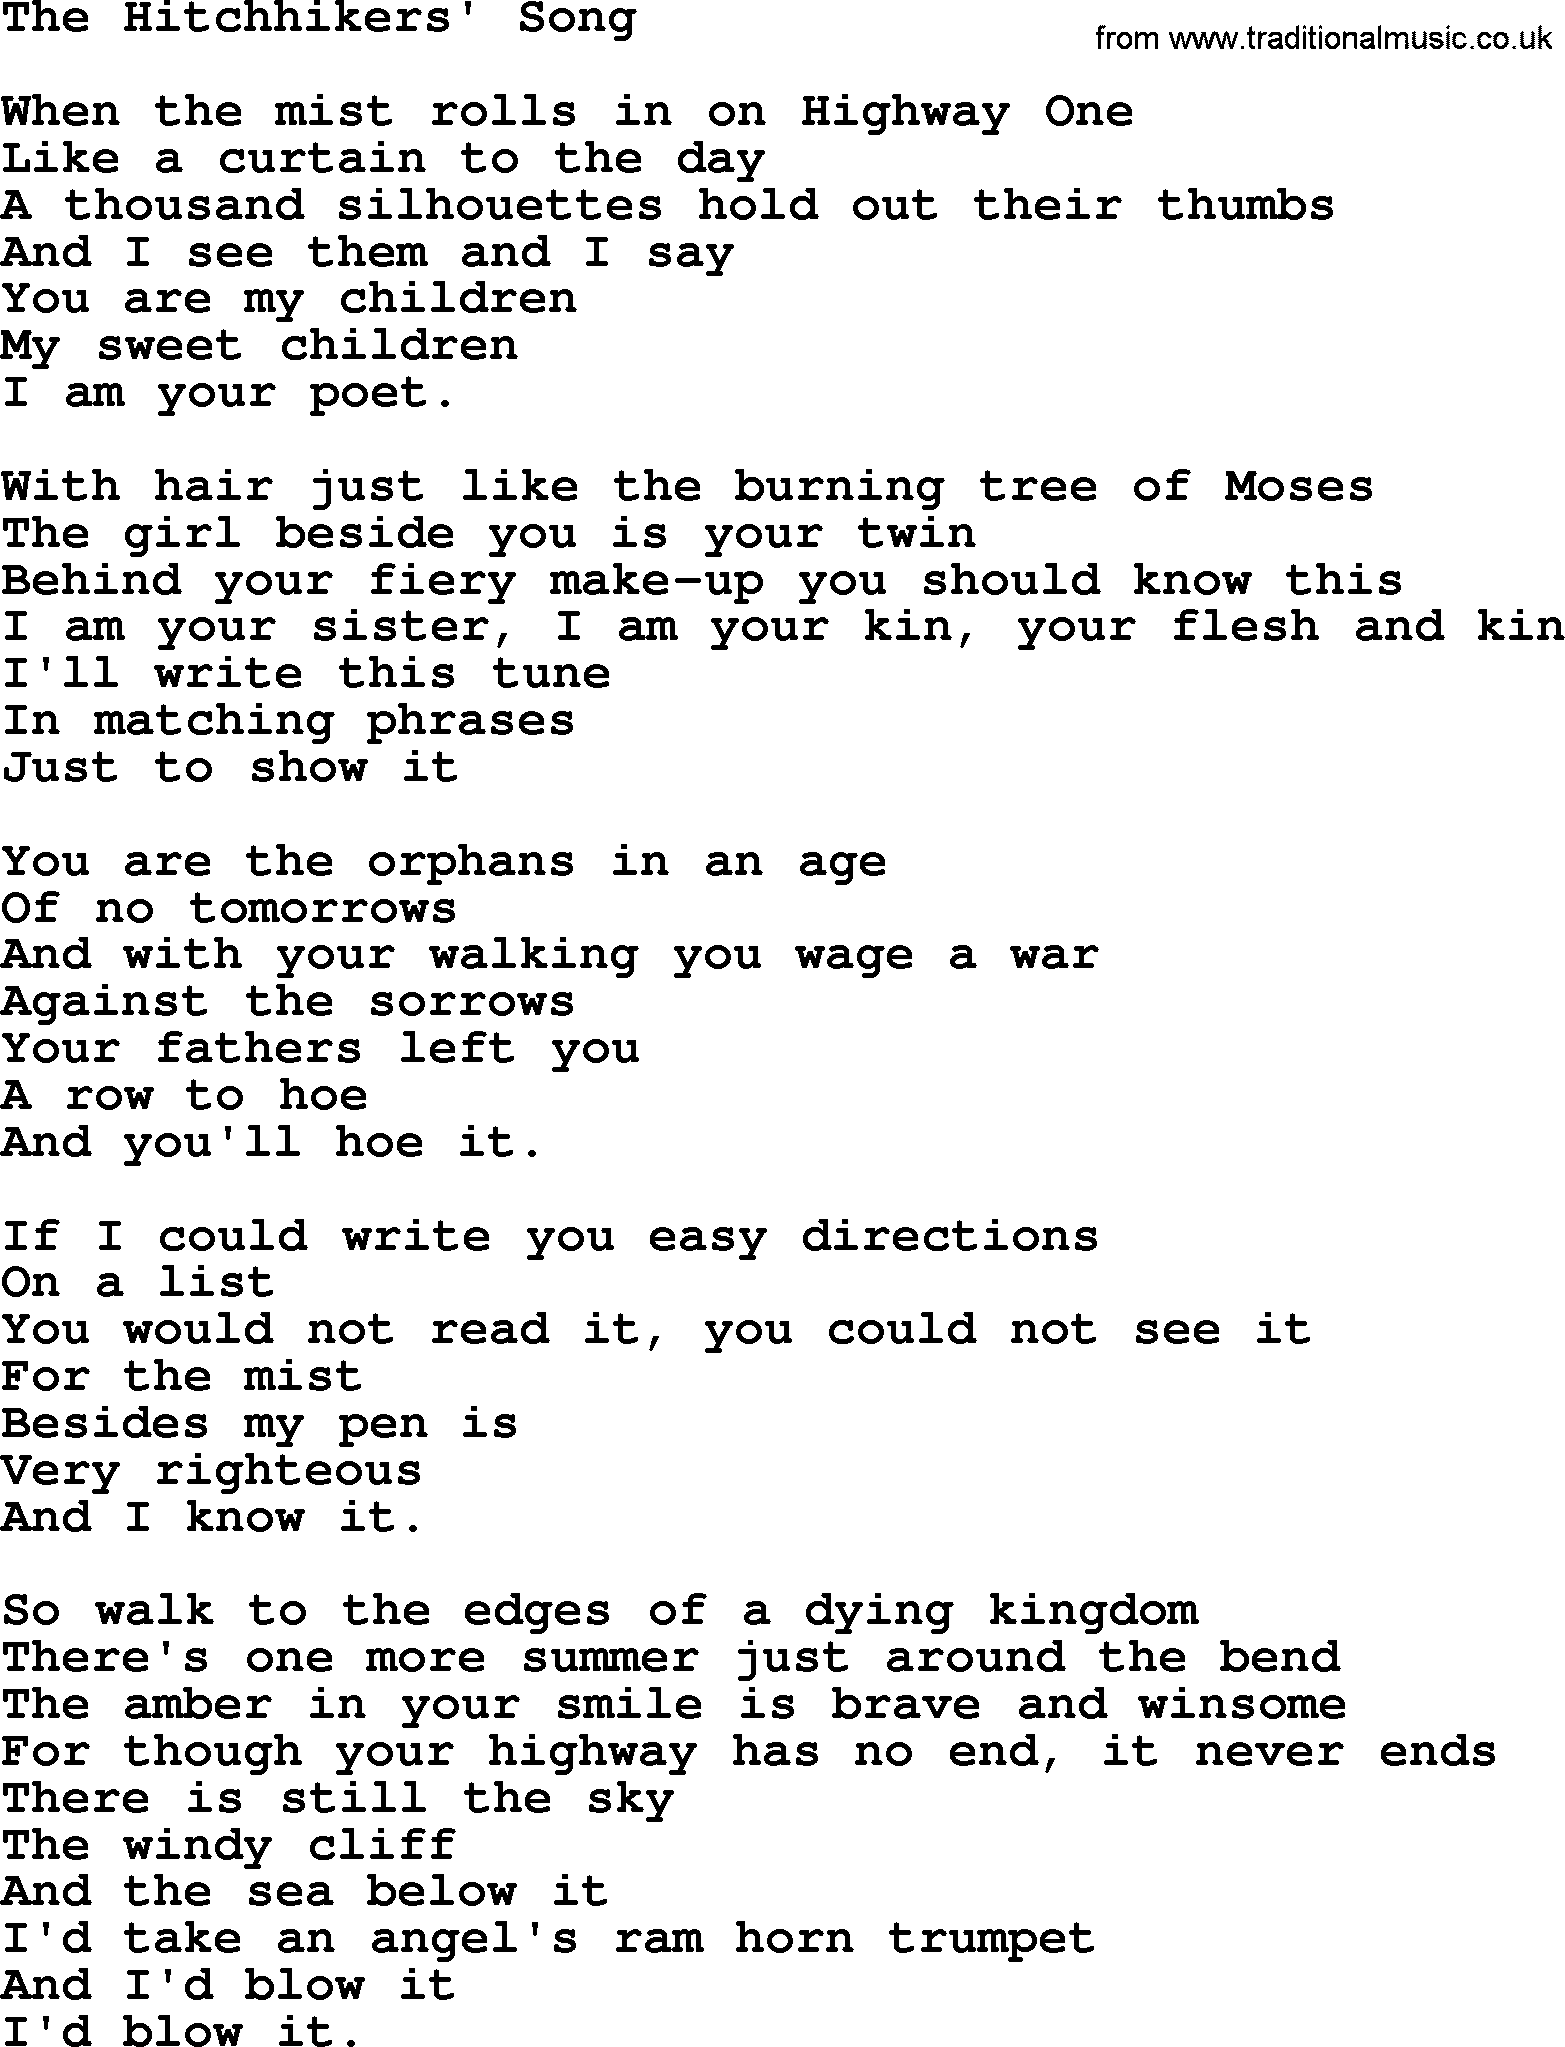 Joan Baez song The Hitchhikers' Song, lyrics